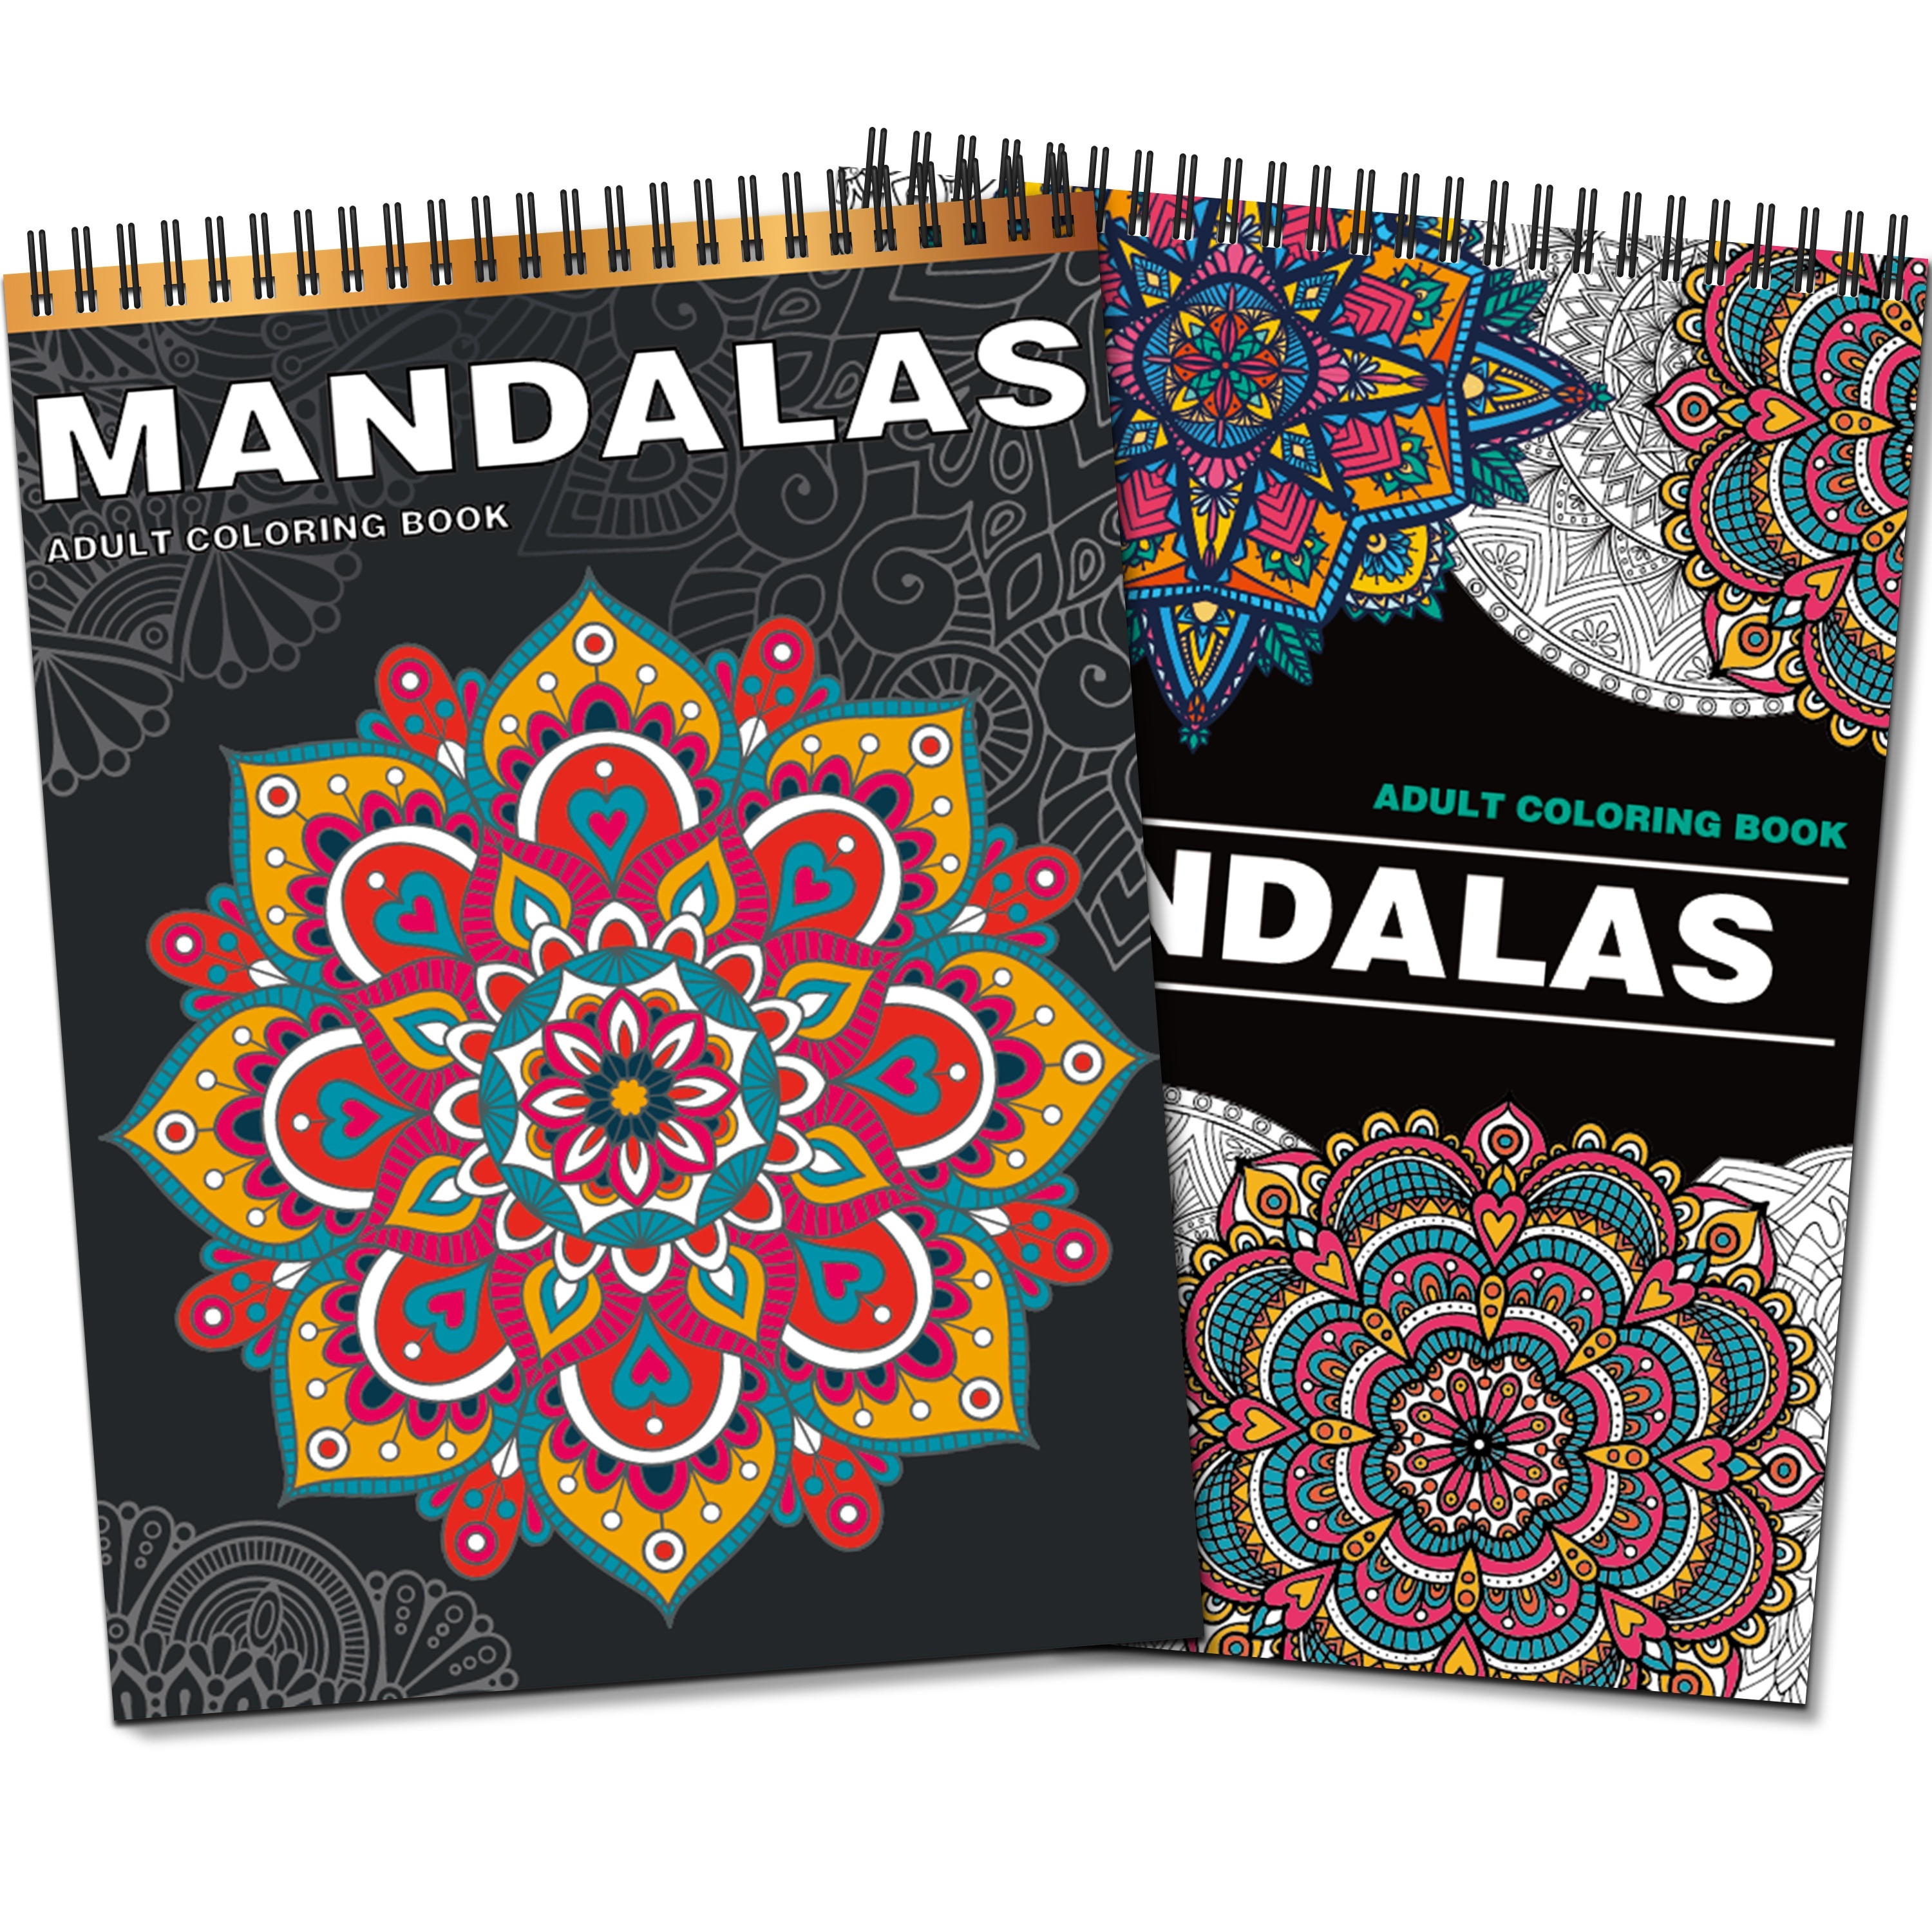 Mandala Libro de Colorear para Adultos - Mandalas Relajantes: Libro de  Colorear Antiestrés para Adultos Libro para Pintar Mandala para Adultos  Libros (Paperback)